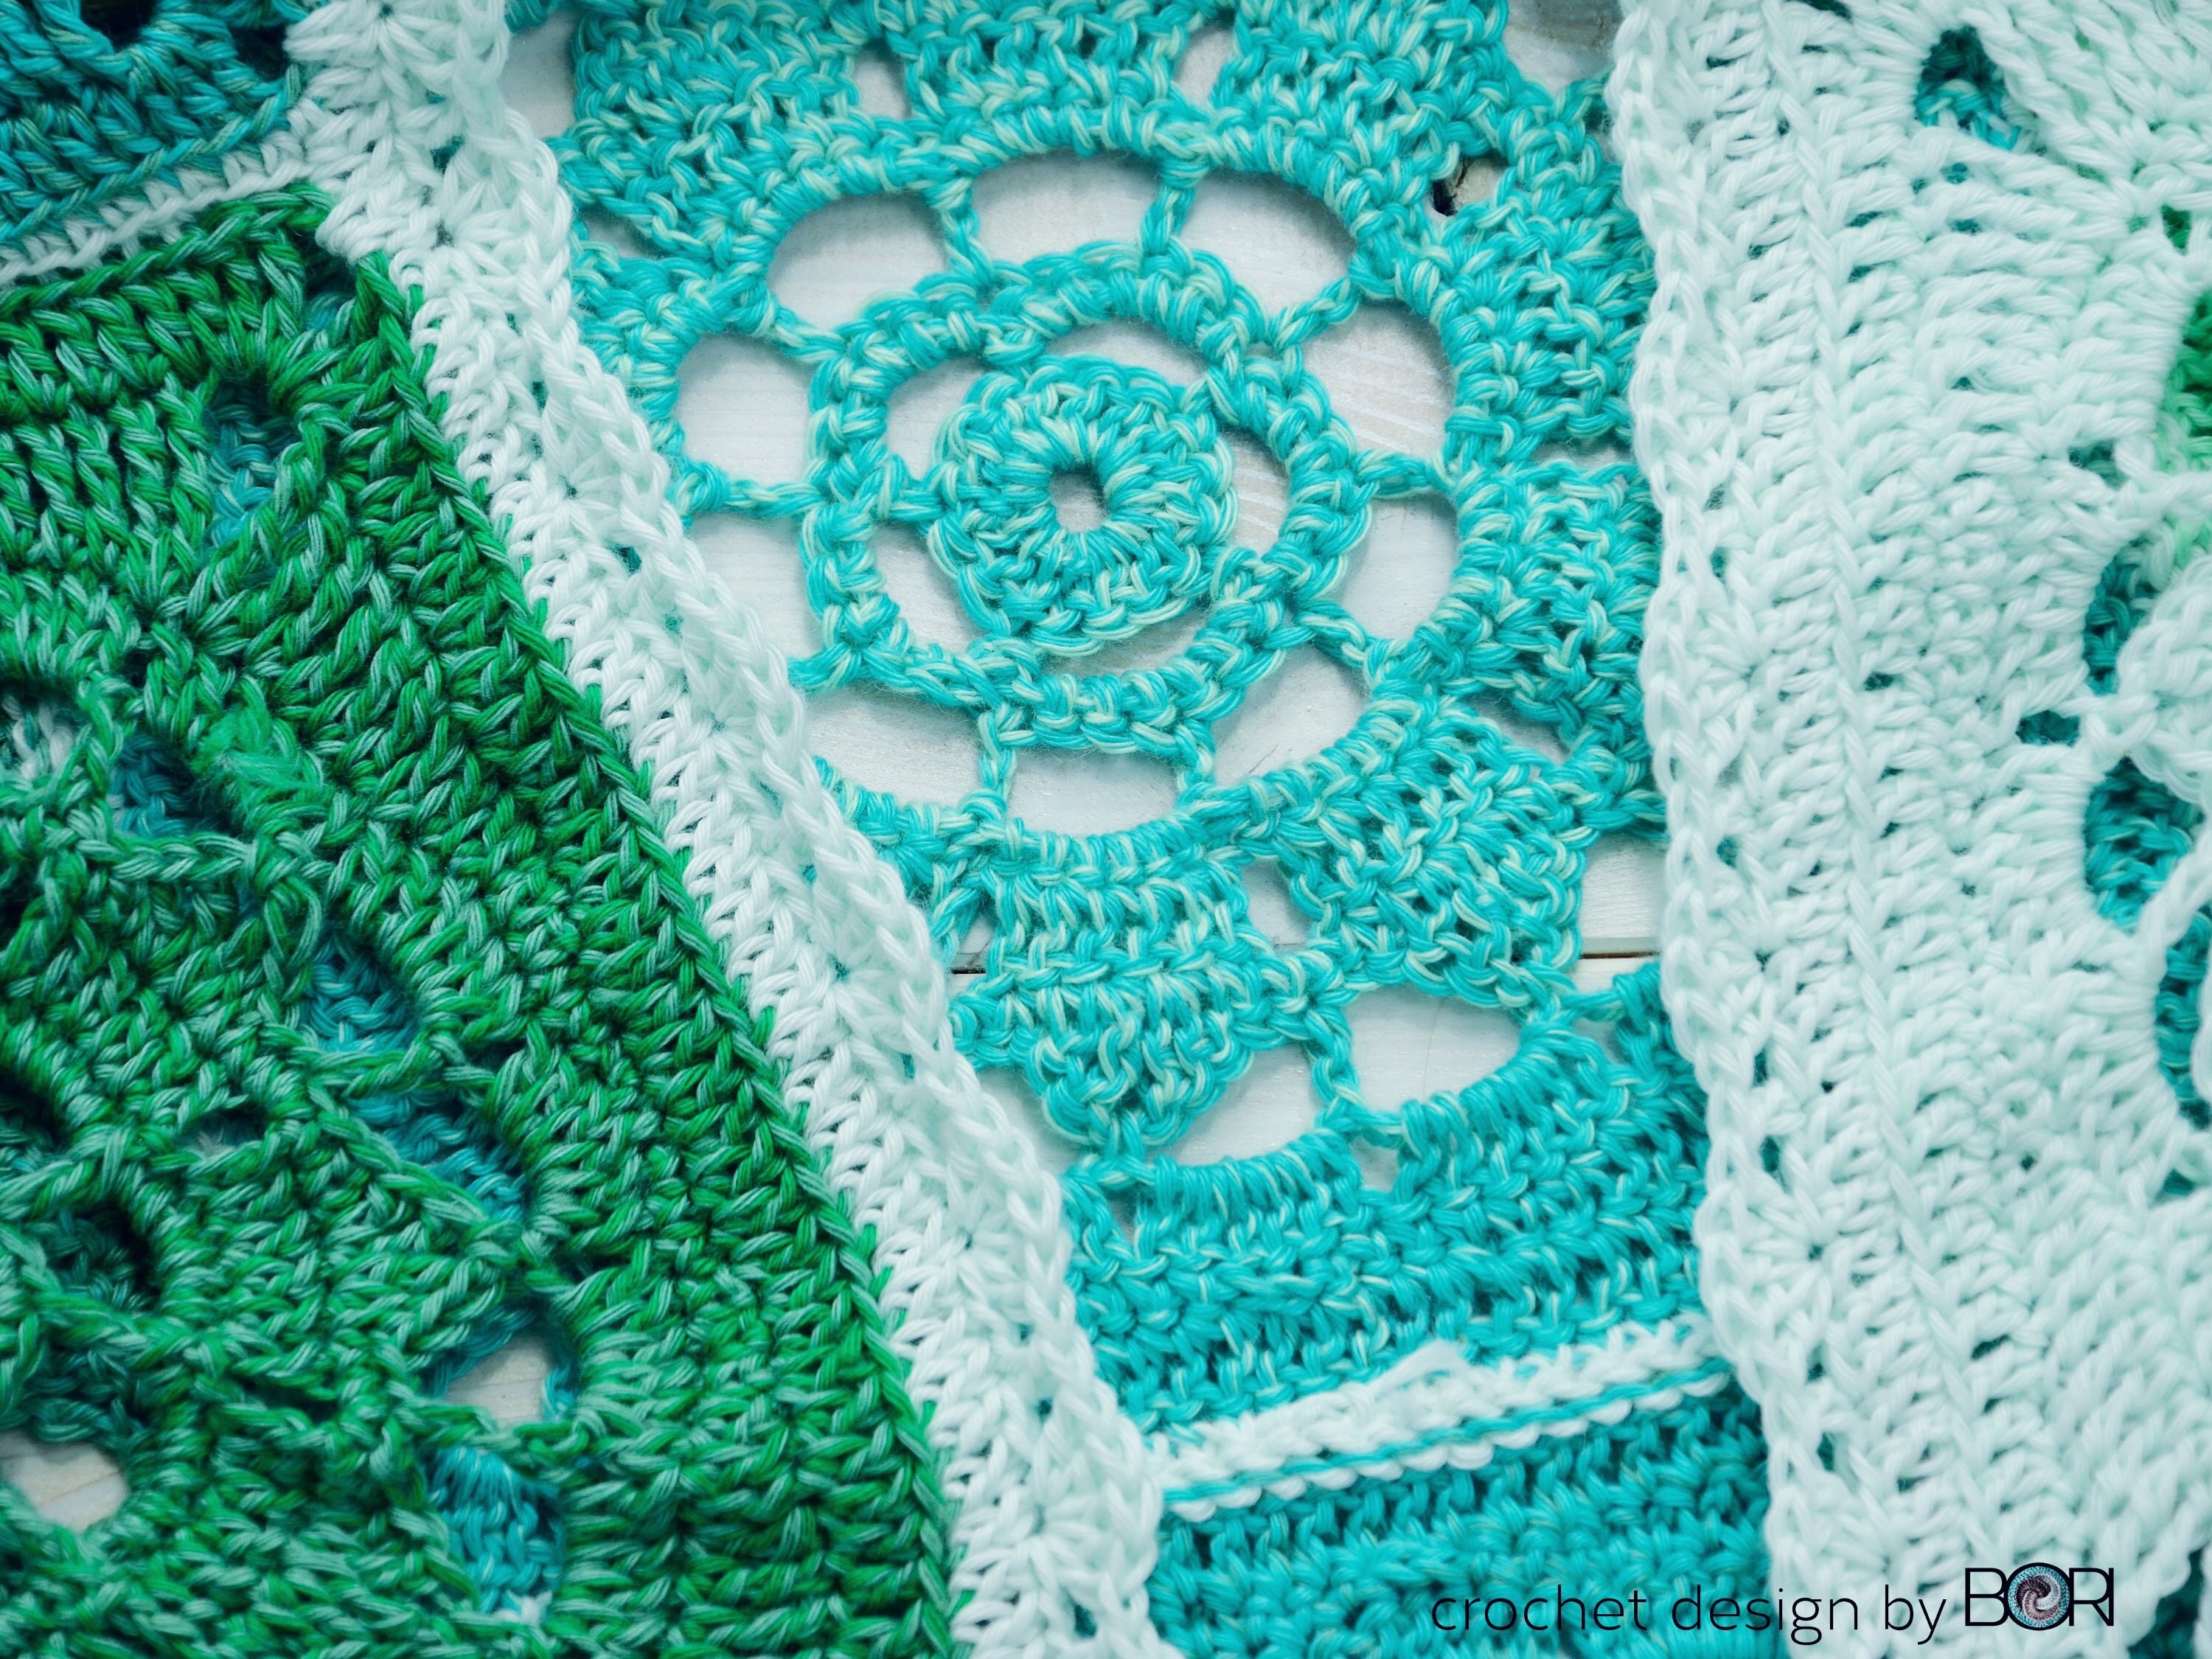 DESIGNbyBORI, DIY, crochet phone case pattern kit